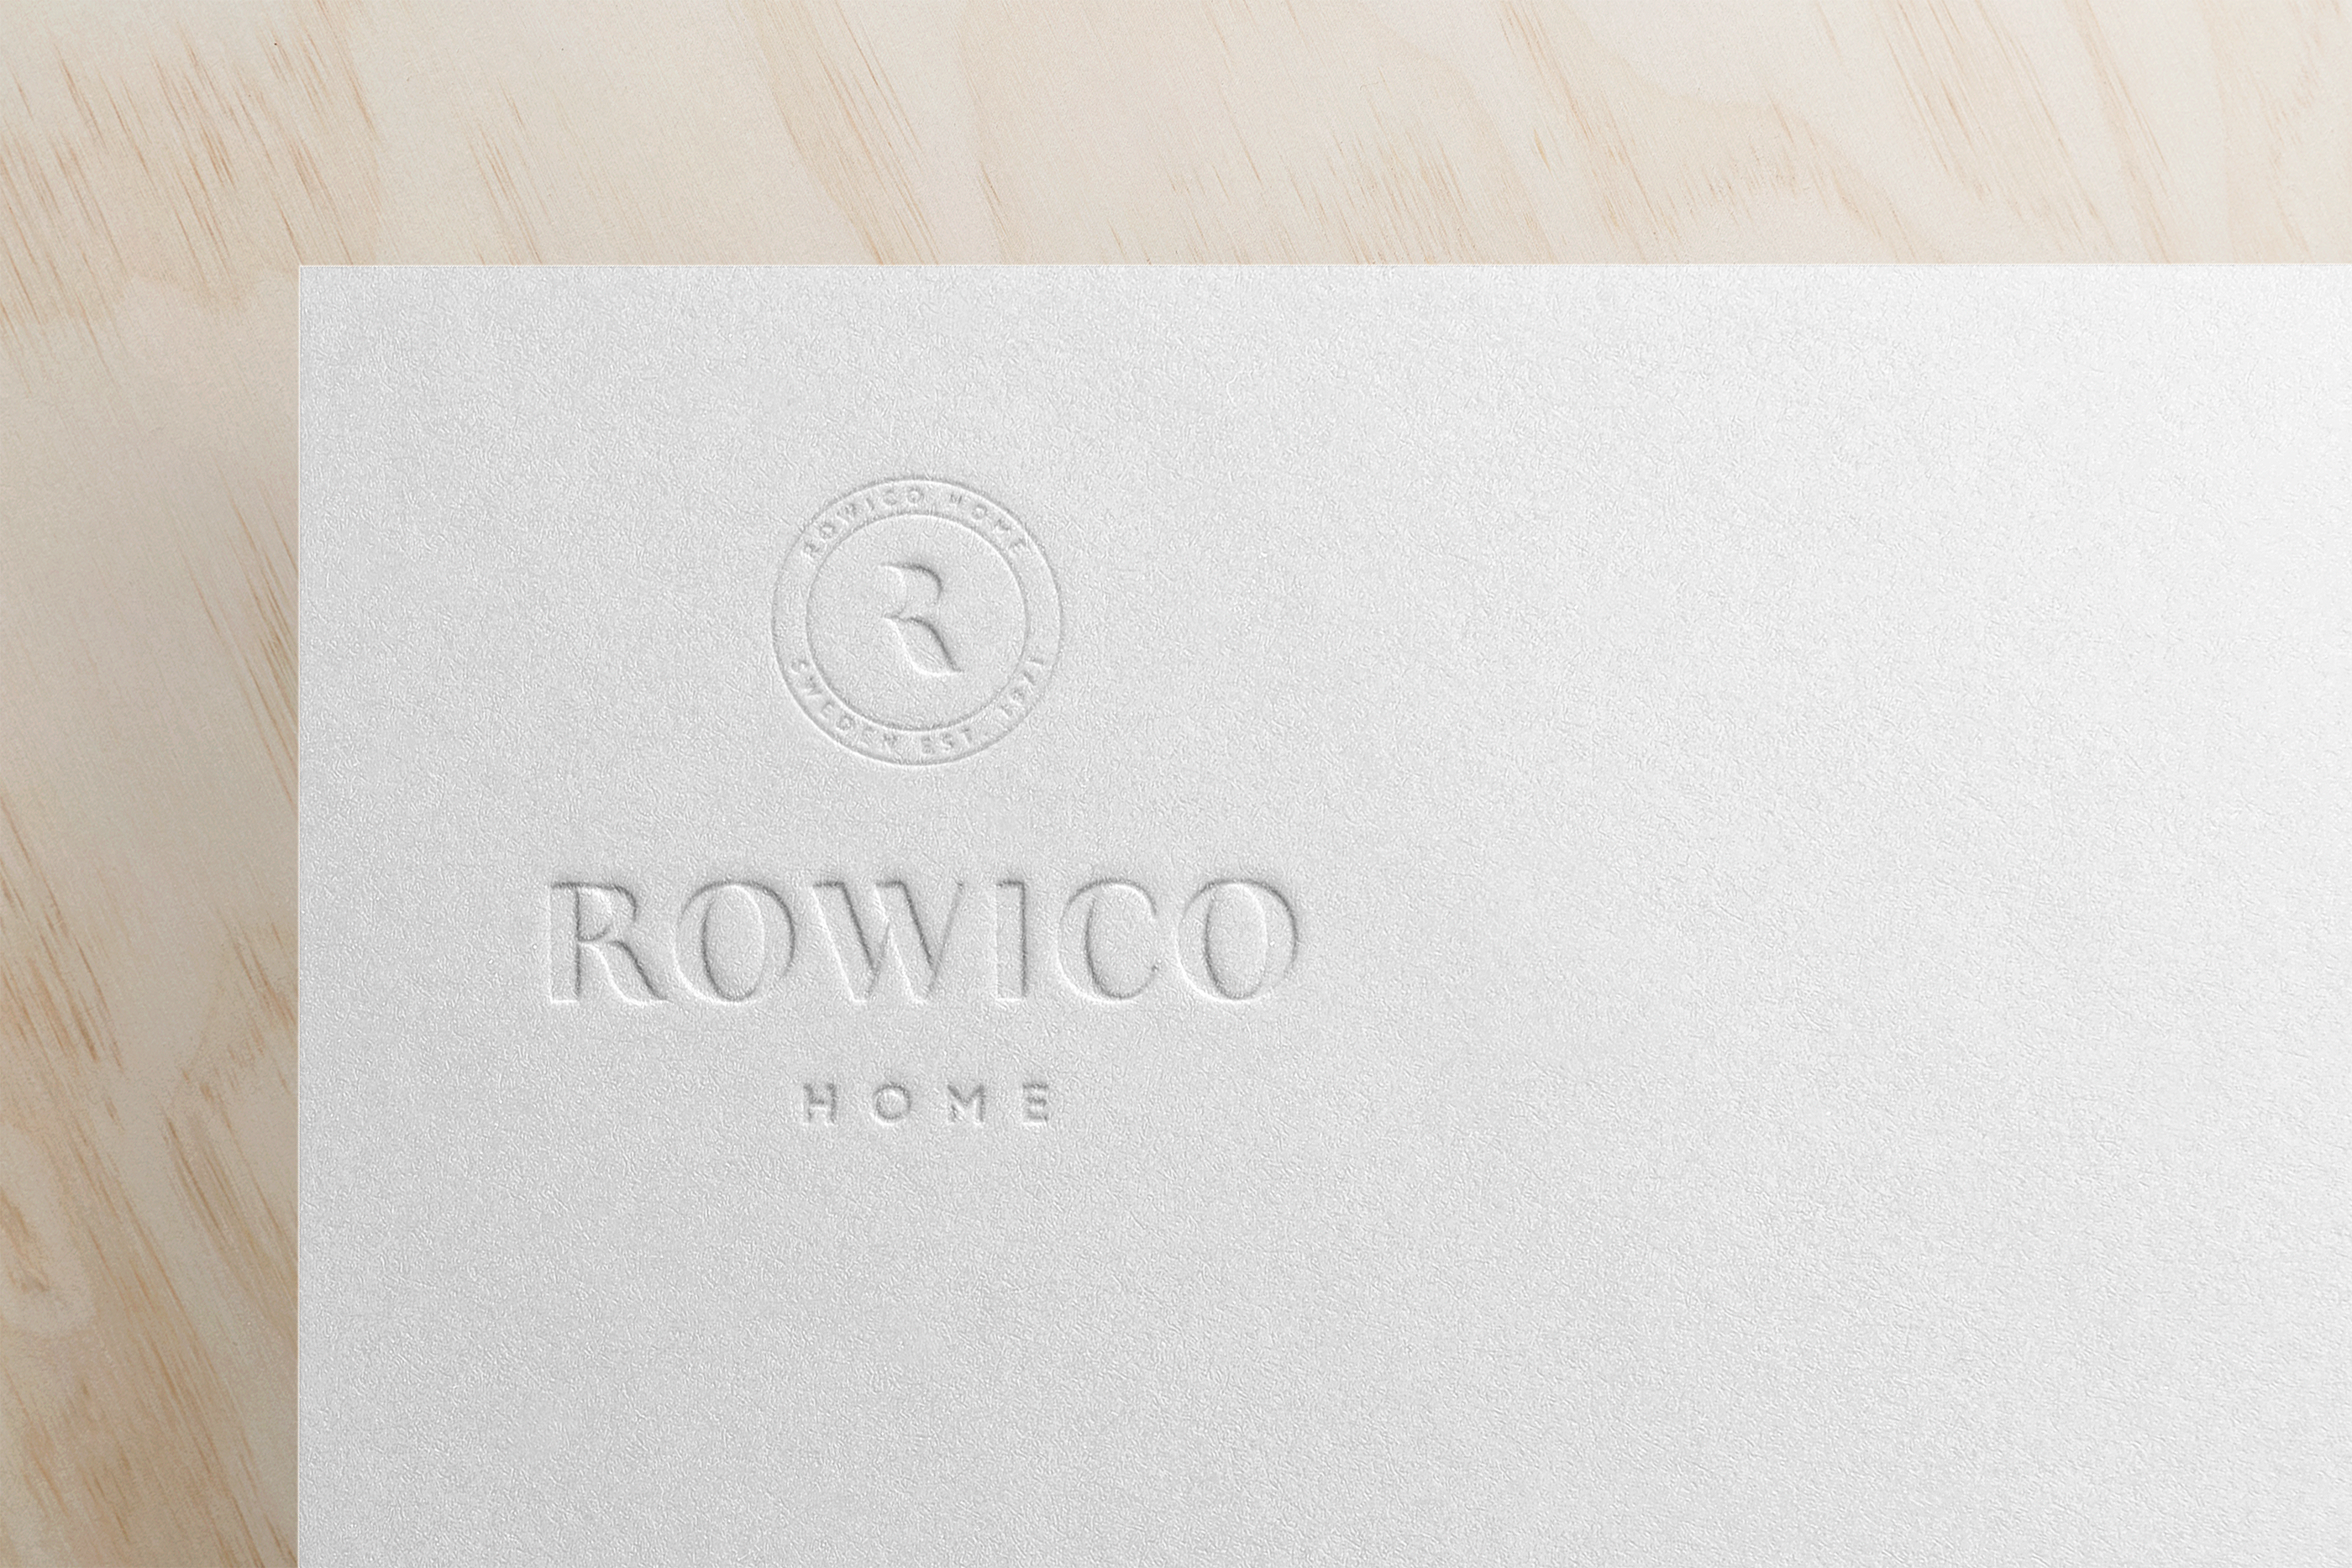 Rowico_logo_letterpress